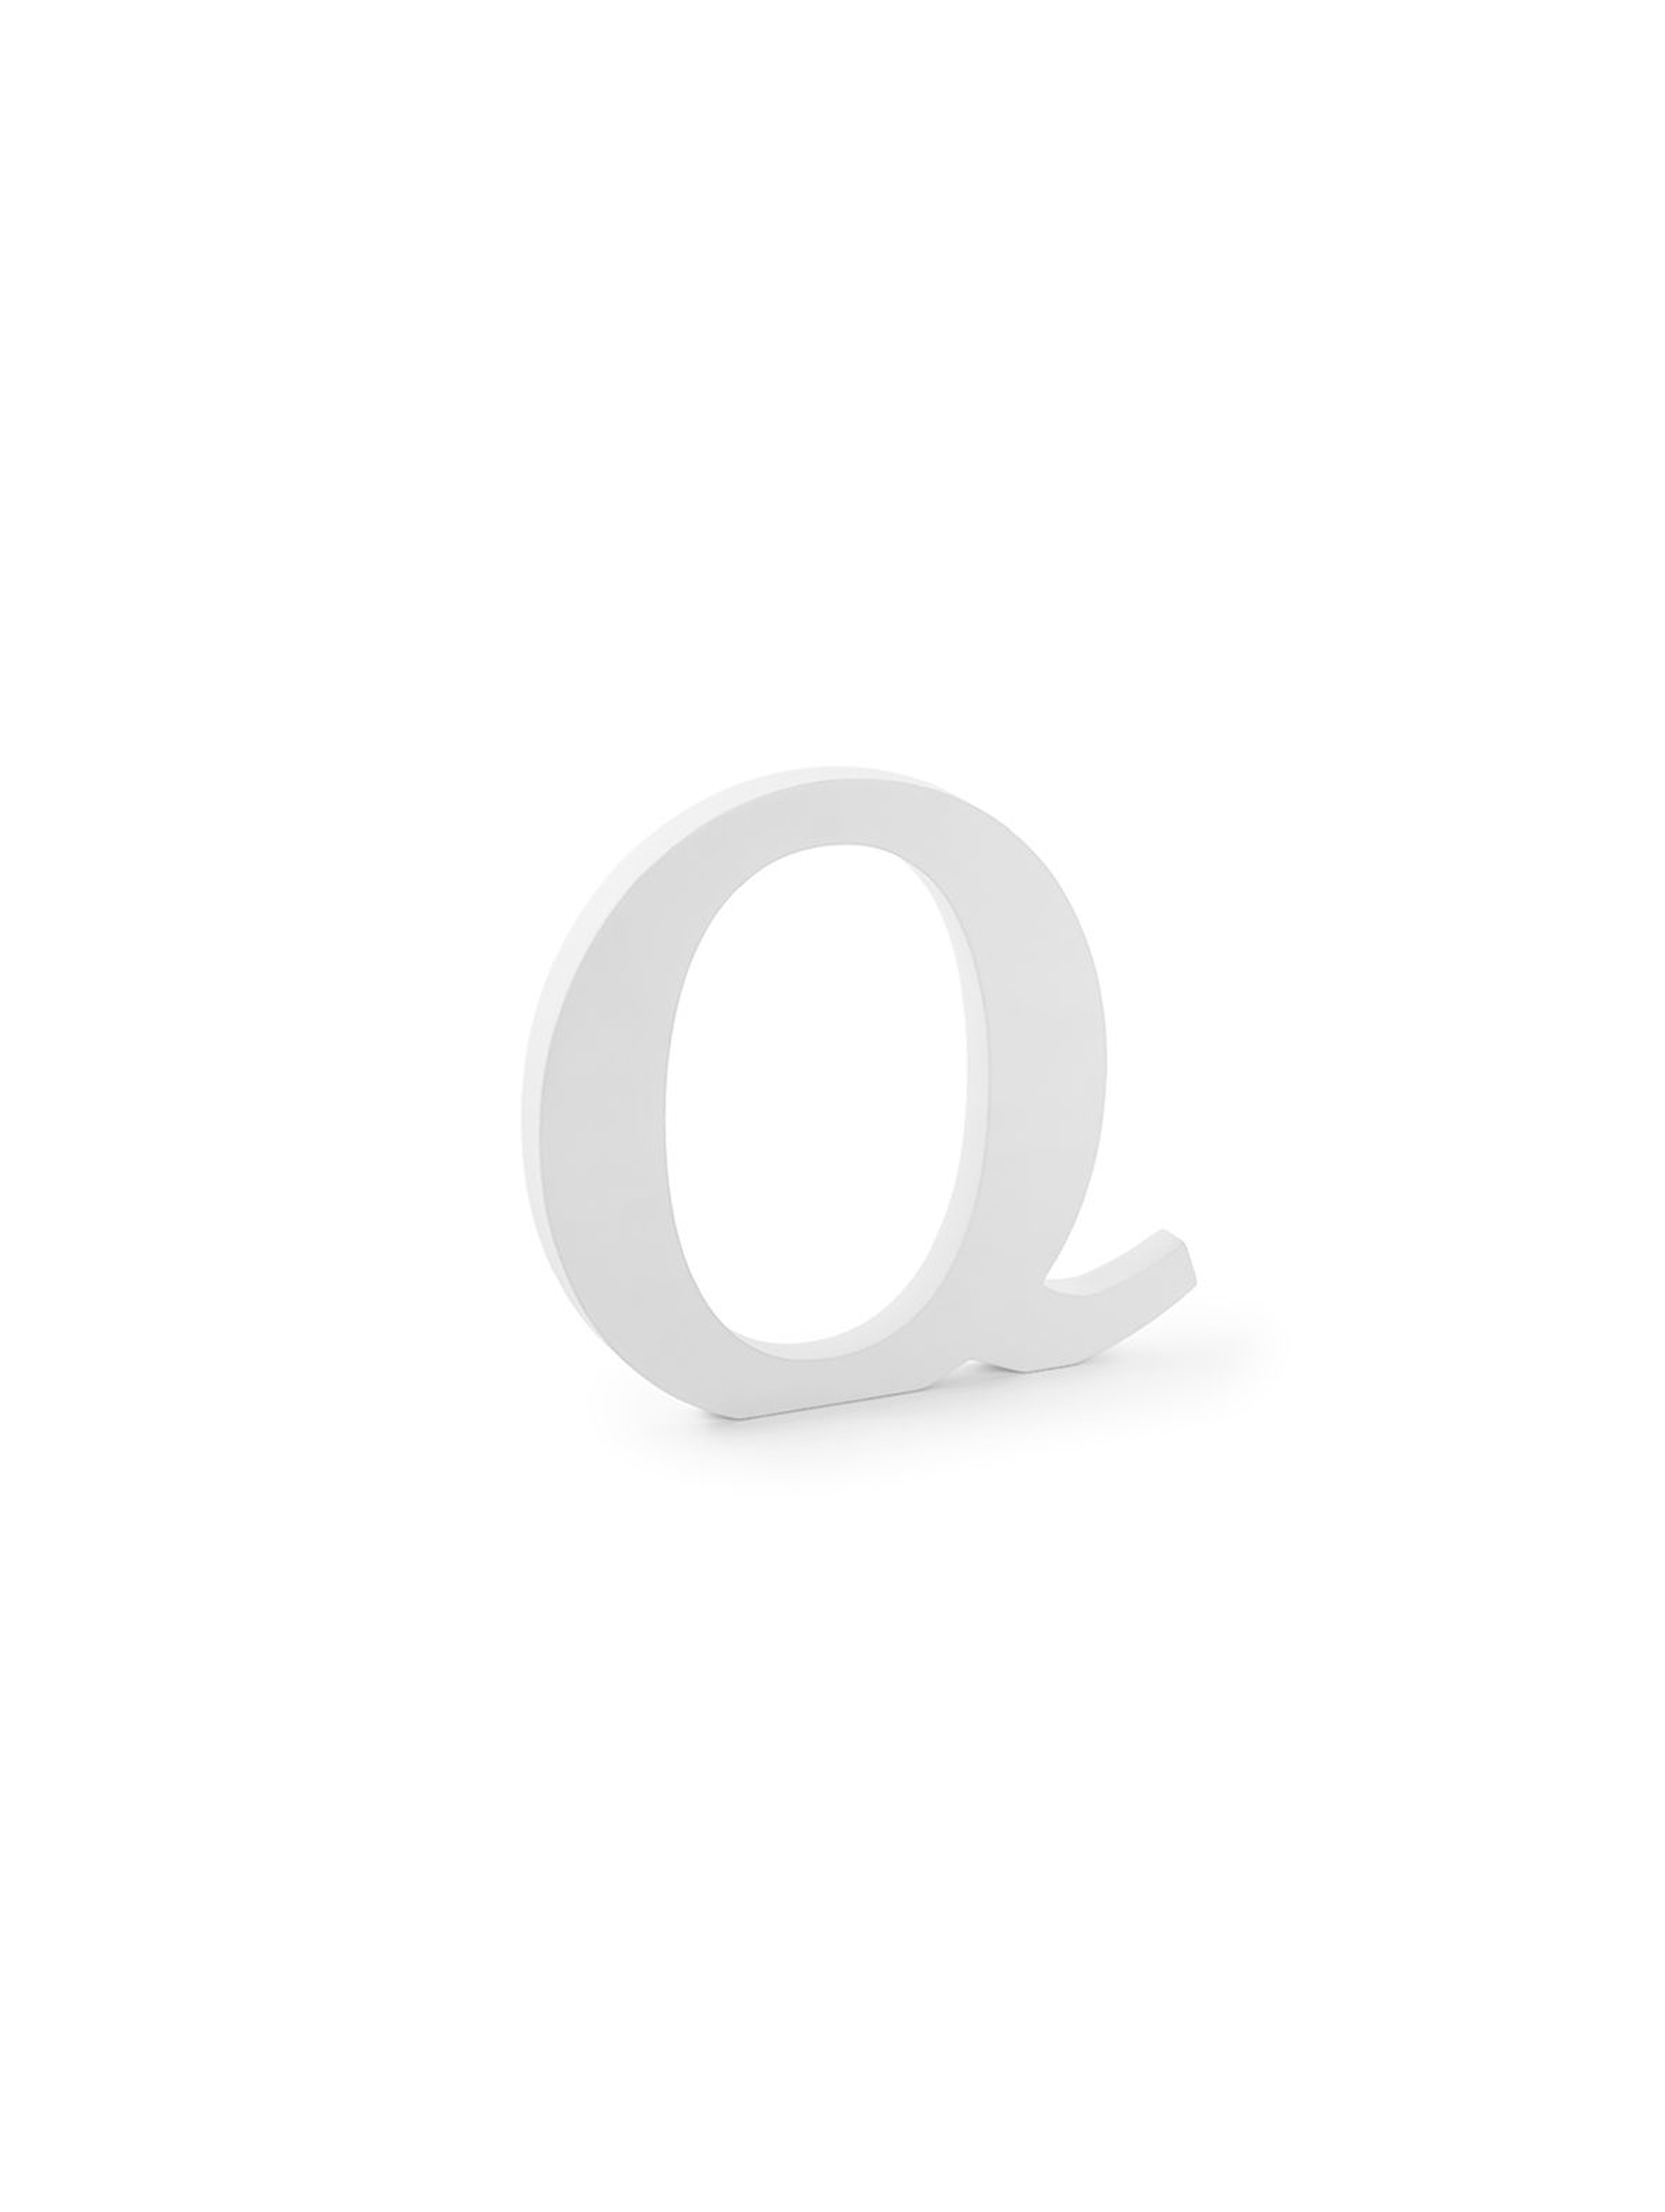 Drewniana litera Q biała 22.5x20.5cm - 1 szt.